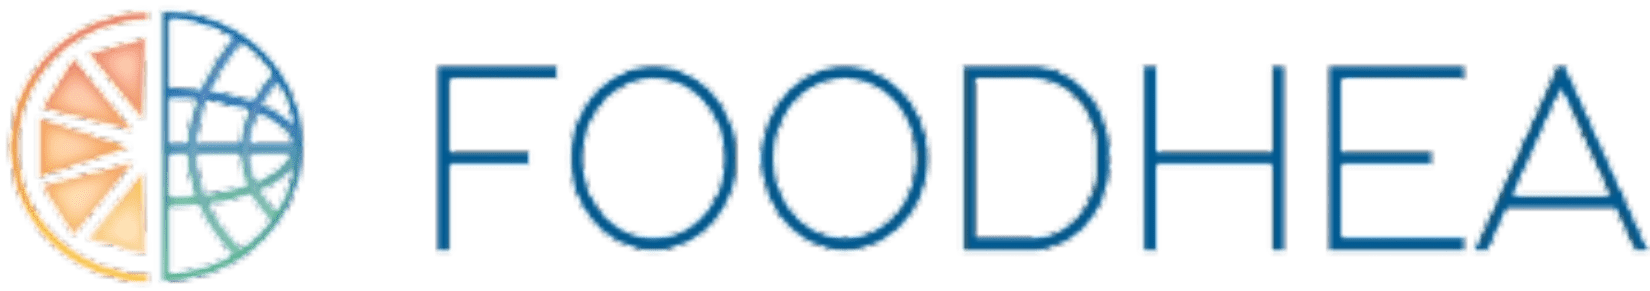 foohea logo